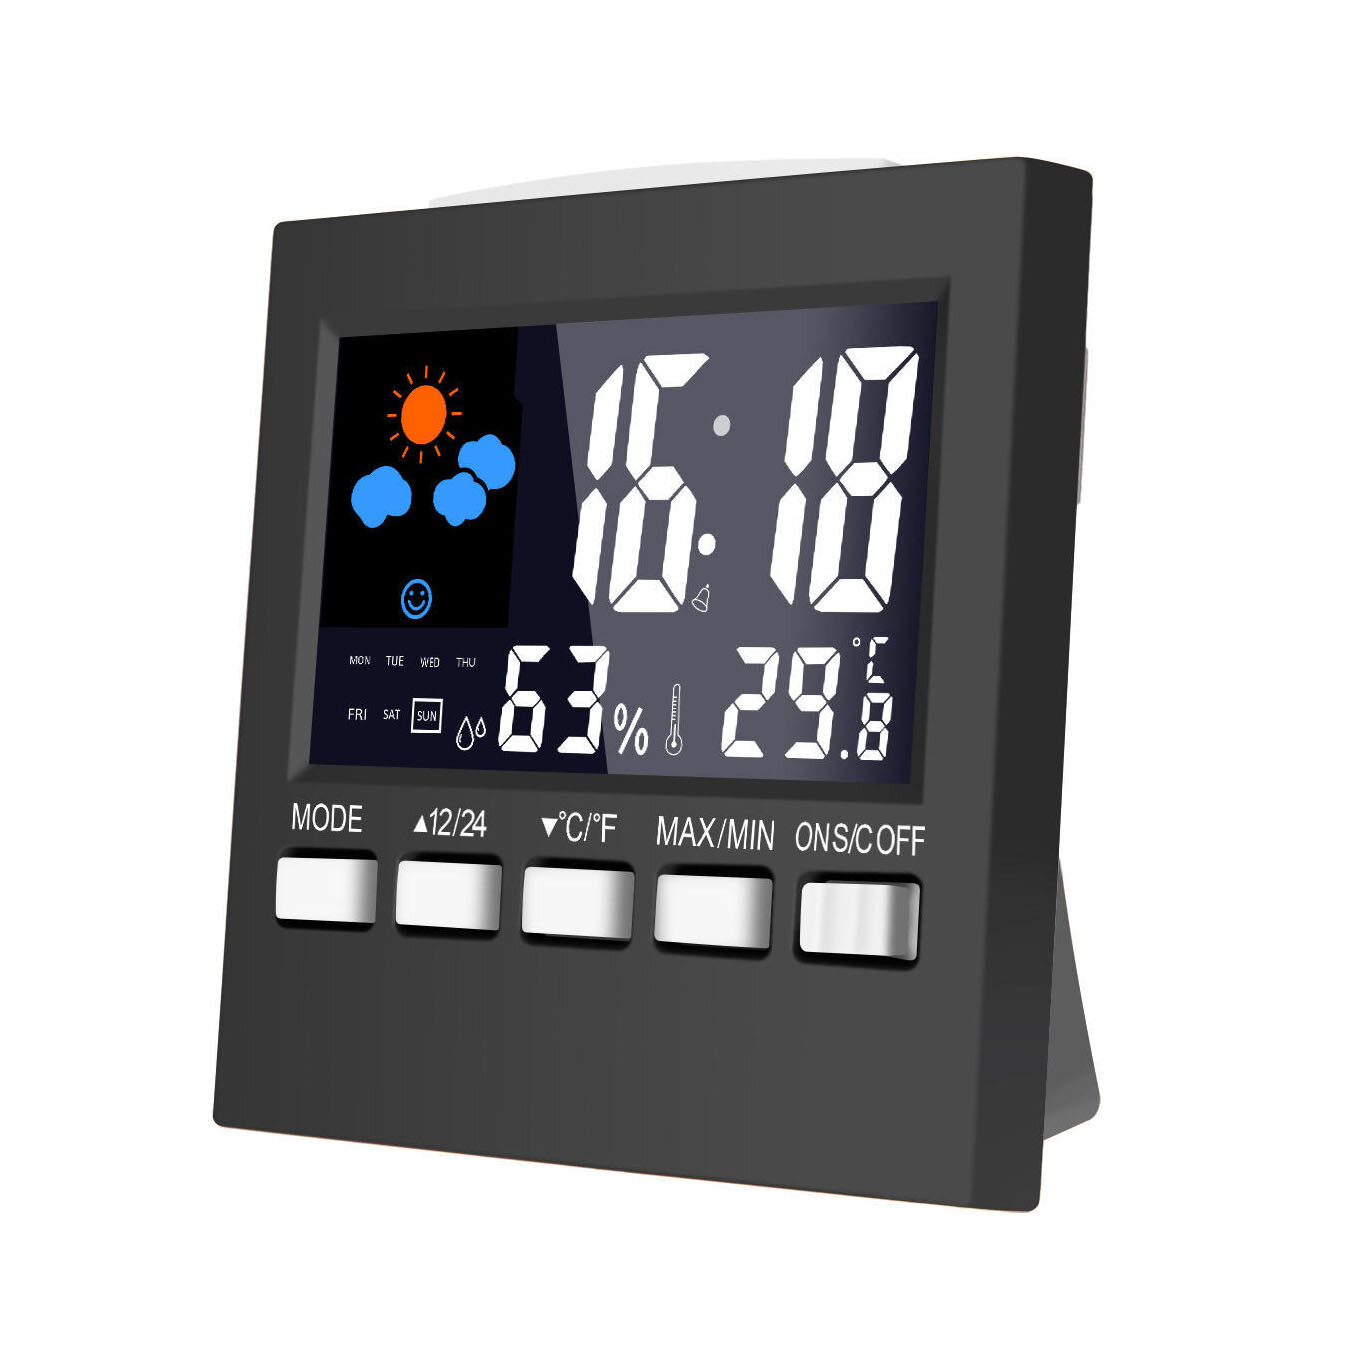 Calendar Time LED Digital Alarm clock Thermometer/Hygrometer Display Timer